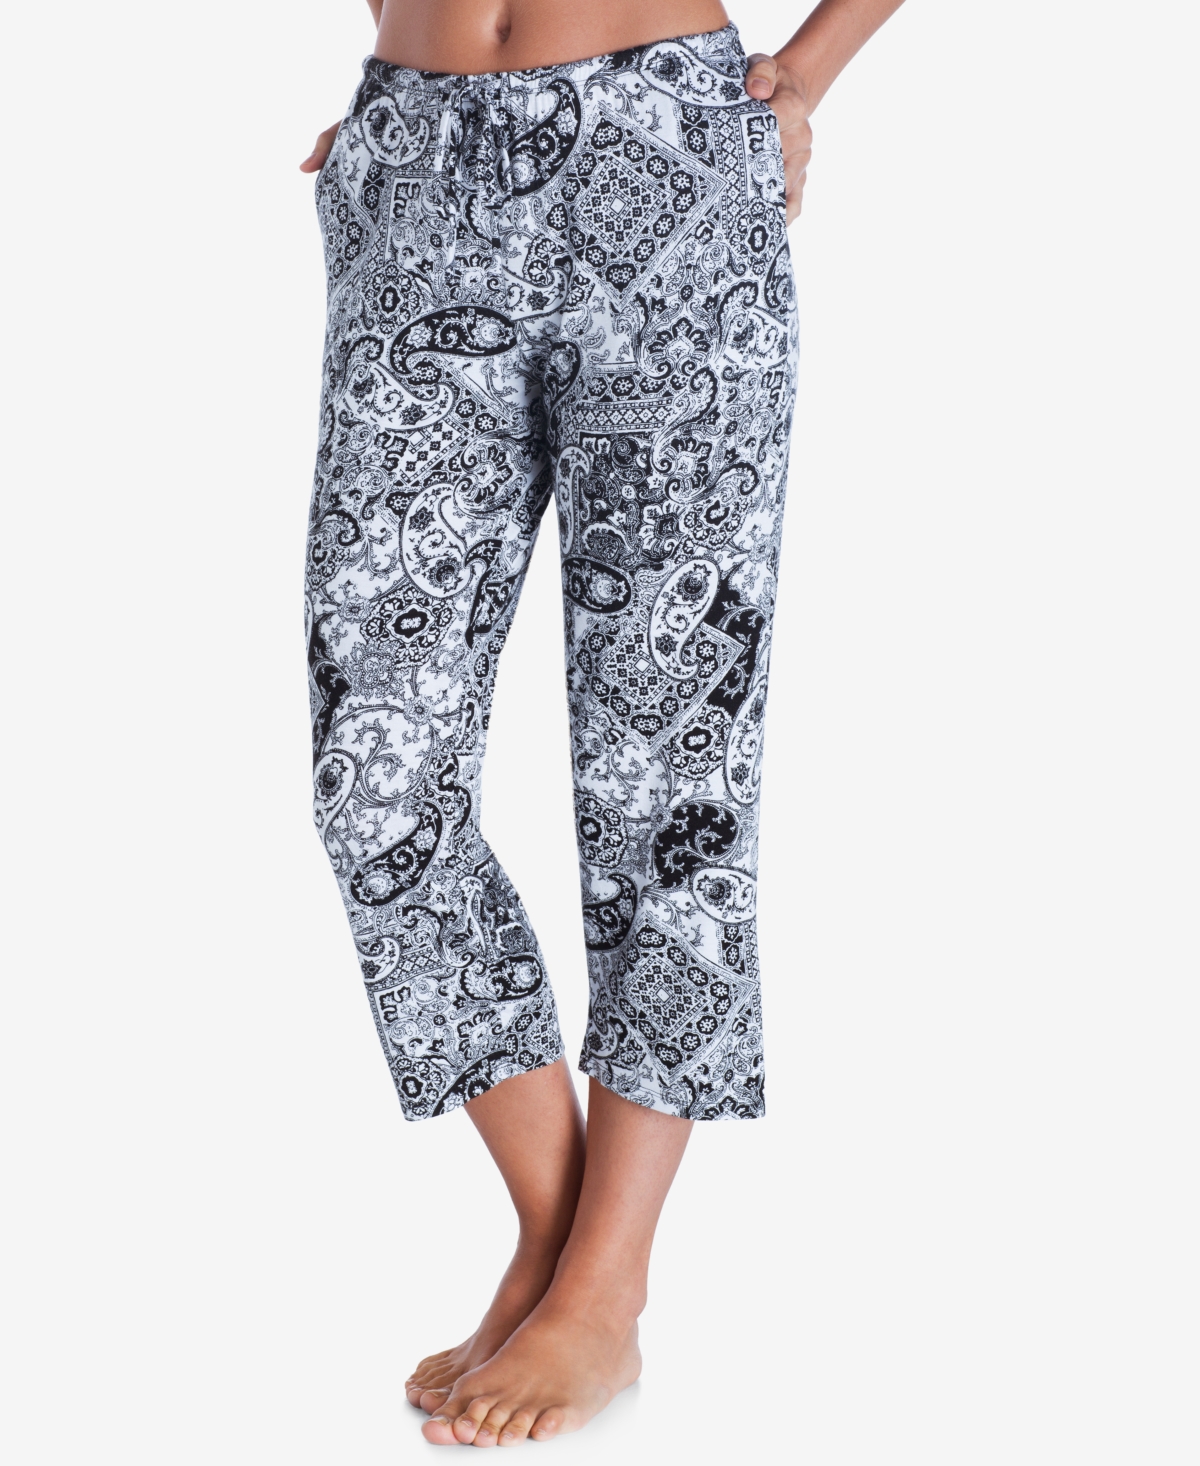 Yours to Love Capri Pajama Pants - Grey Dots